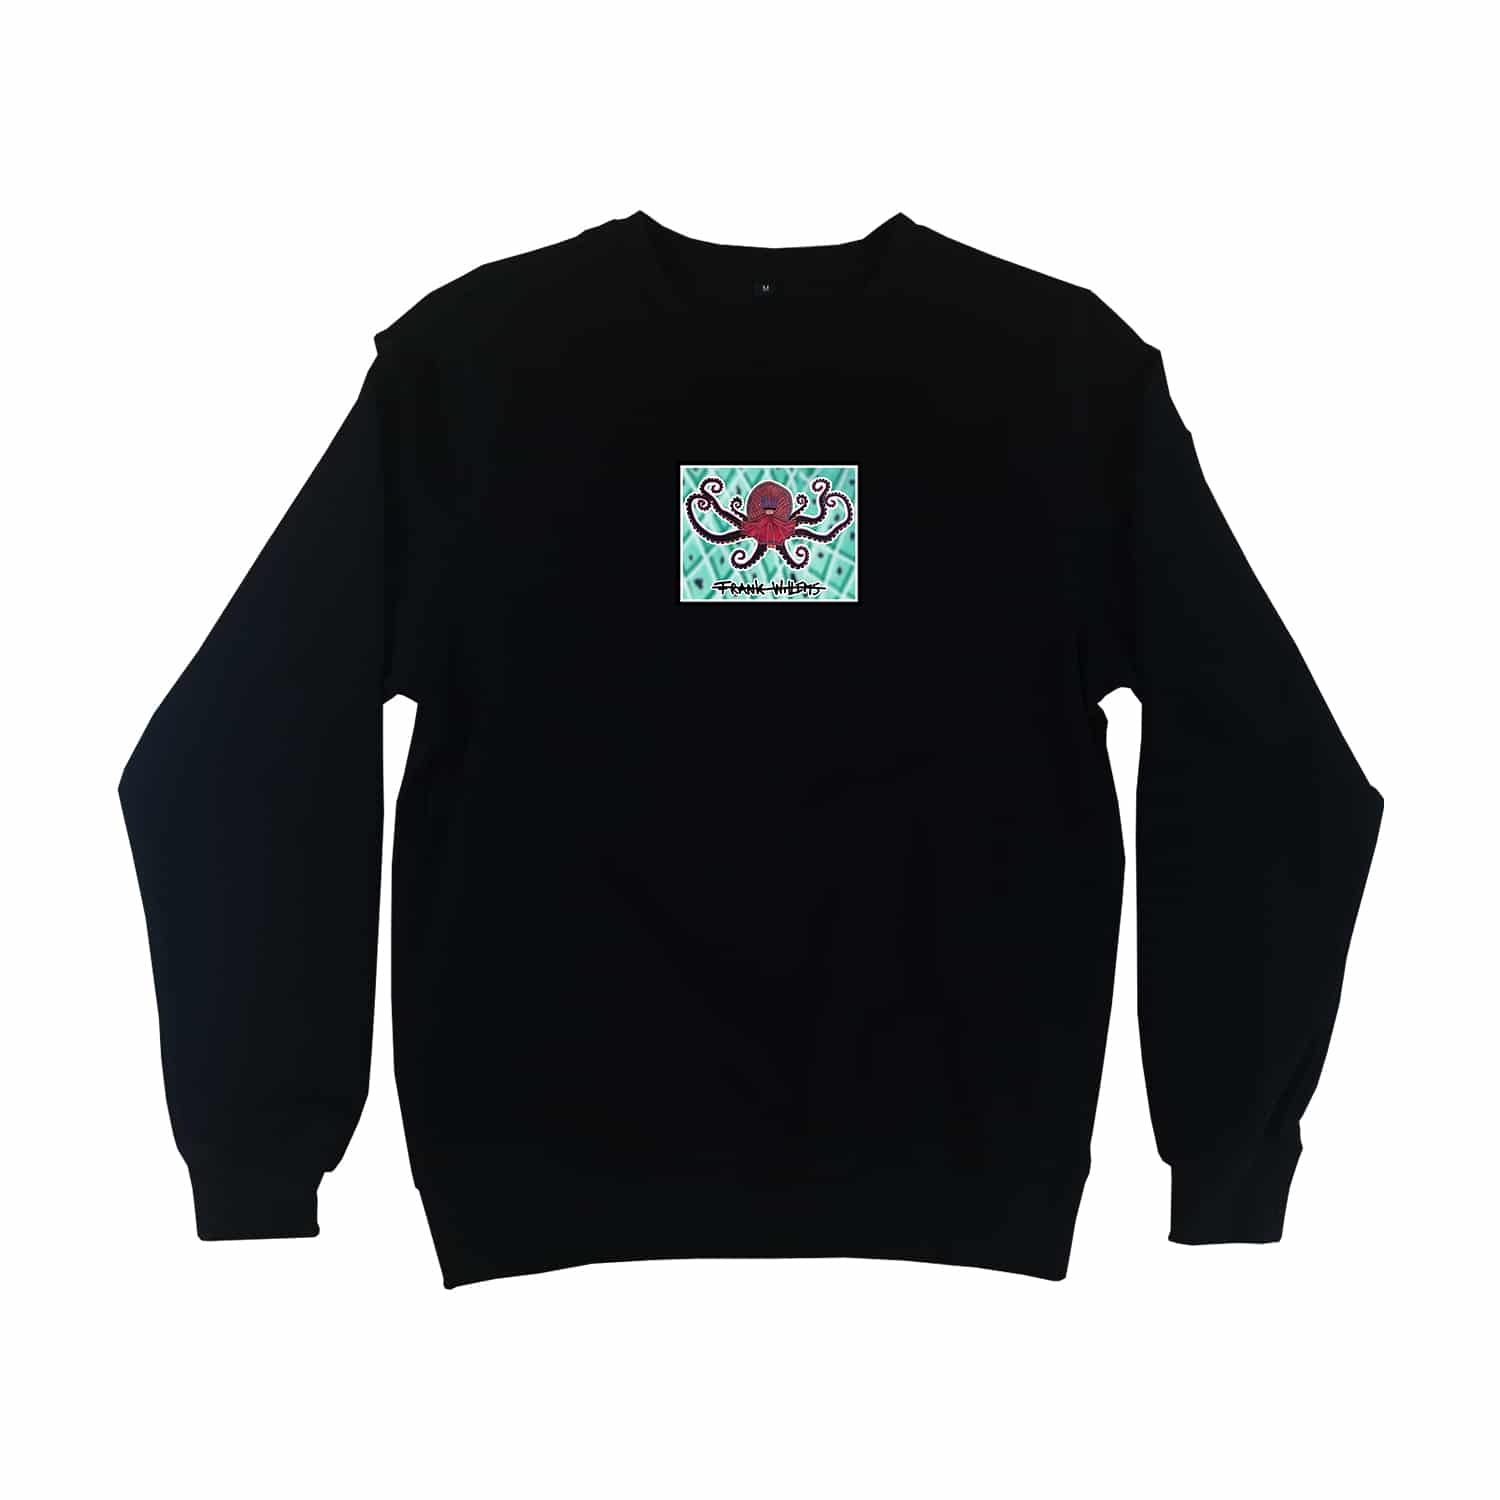 Sweater black - 938 - Frank Willems